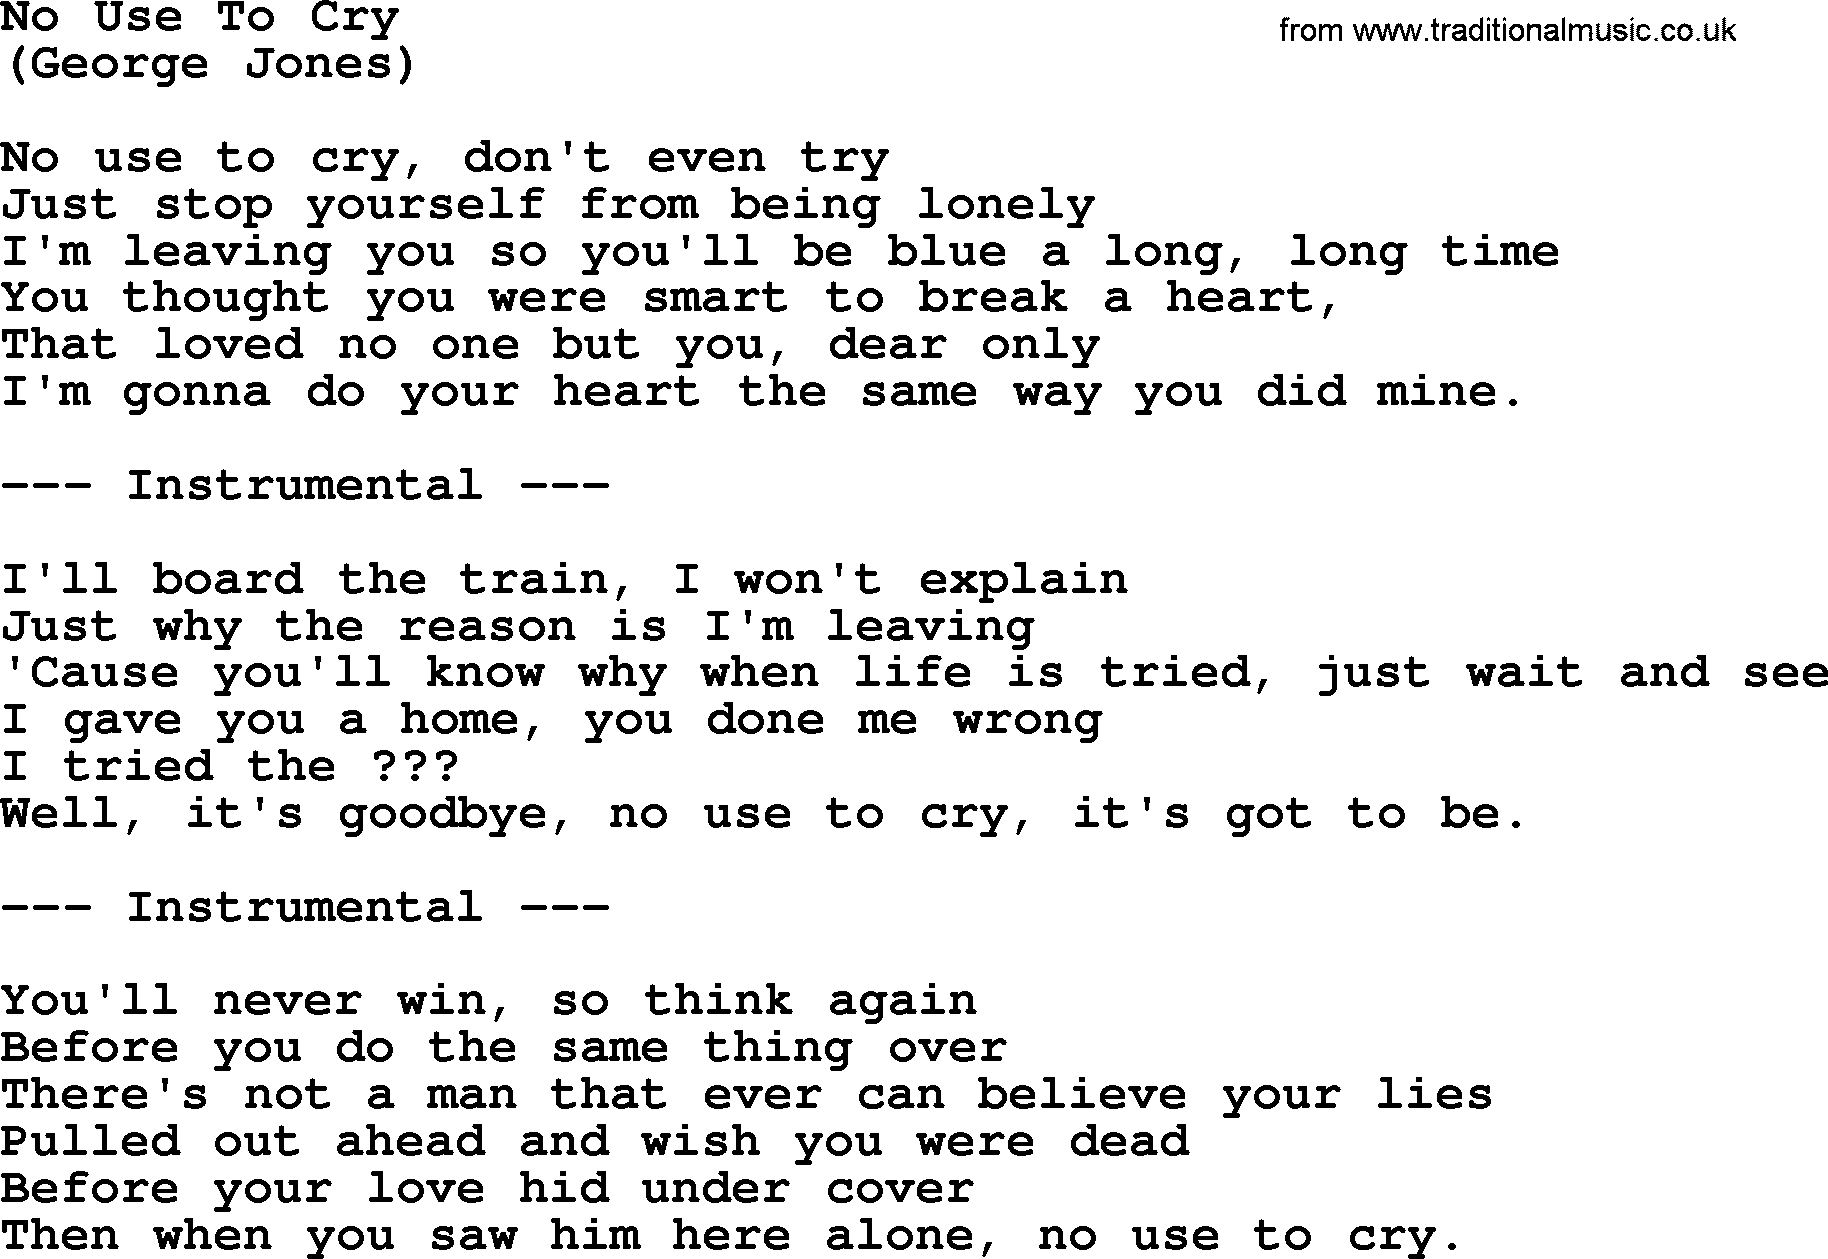 George Jones song: No Use To Cry, lyrics